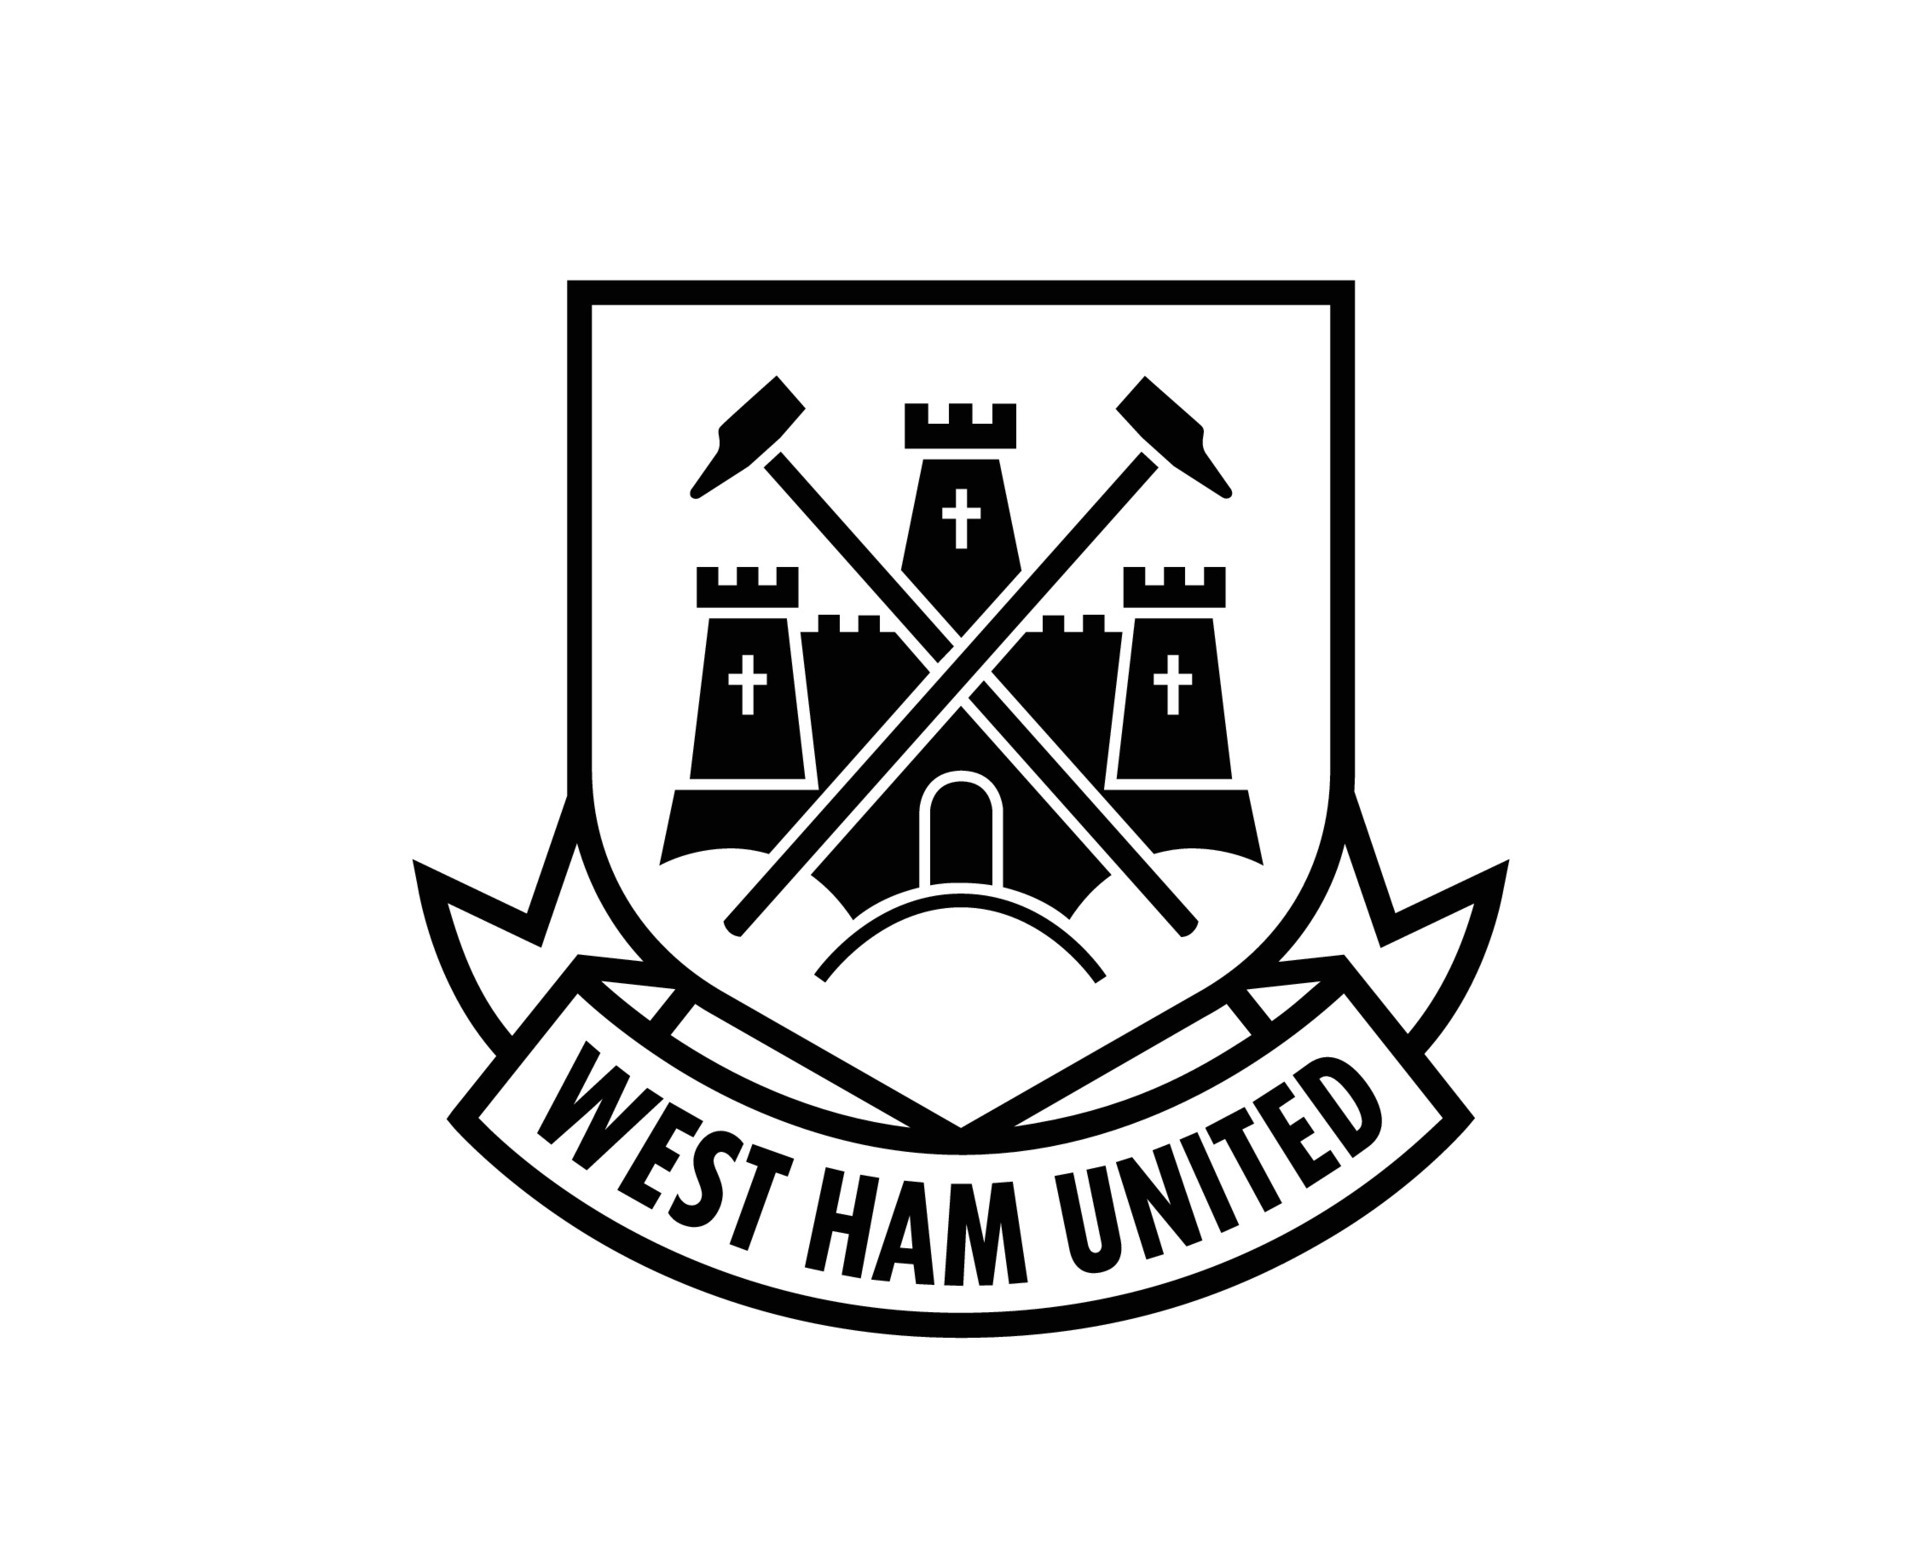 https://static.vecteezy.com/system/resources/previews/026/135/472/original/west-ham-united-club-symbol-black-logo-premier-league-football-abstract-design-illustration-free-vector.jpg